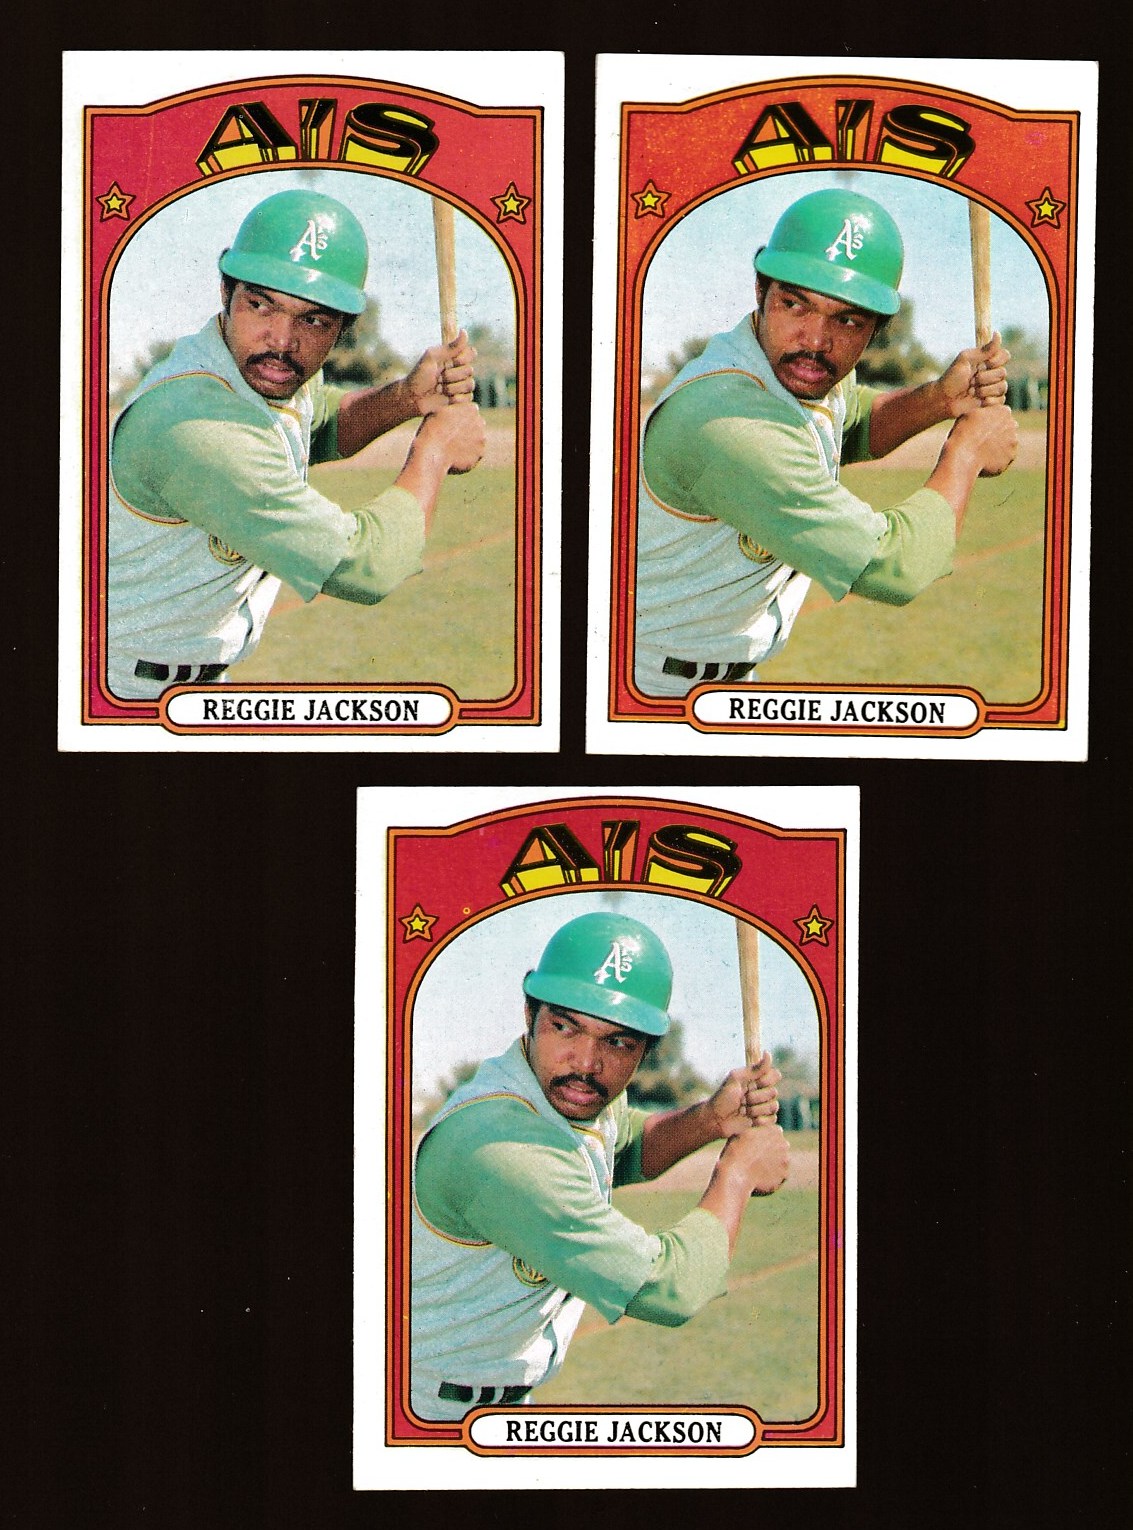 1972 Topps #435 Reggie Jackson (A's) Baseball cards value